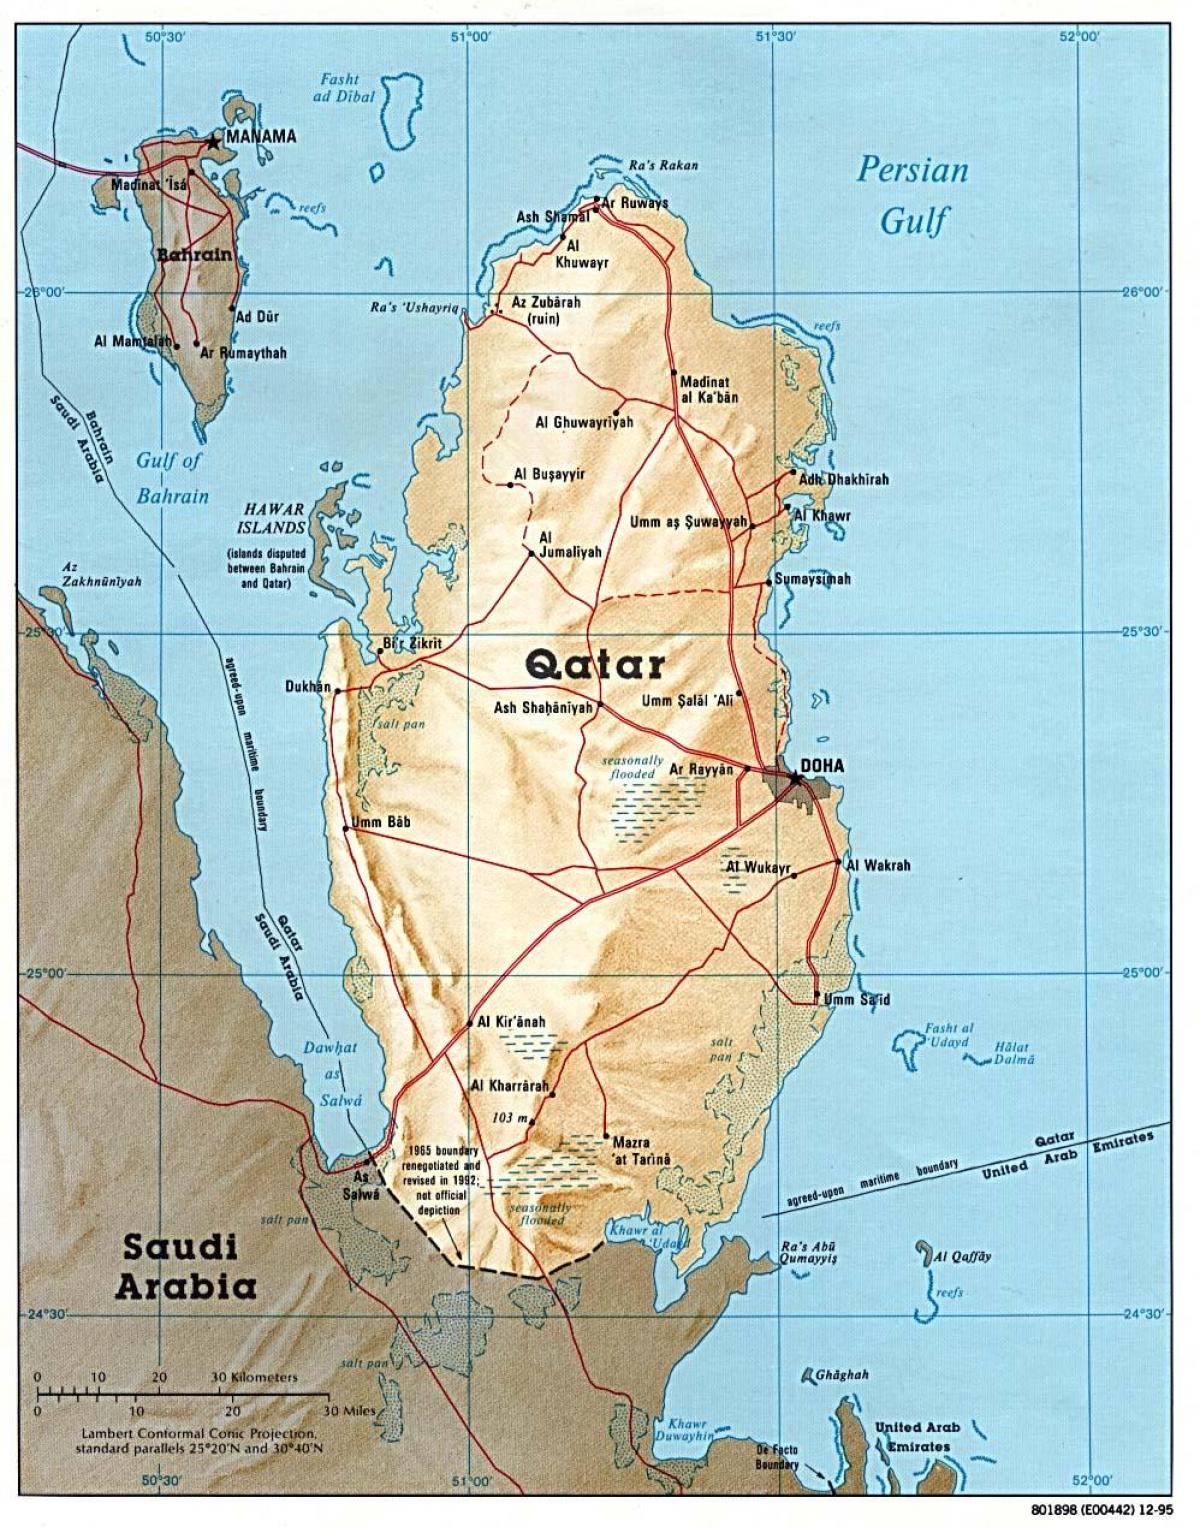 Qatar kartta - Qatar koko kartta (Länsi-Aasia - Aasia)